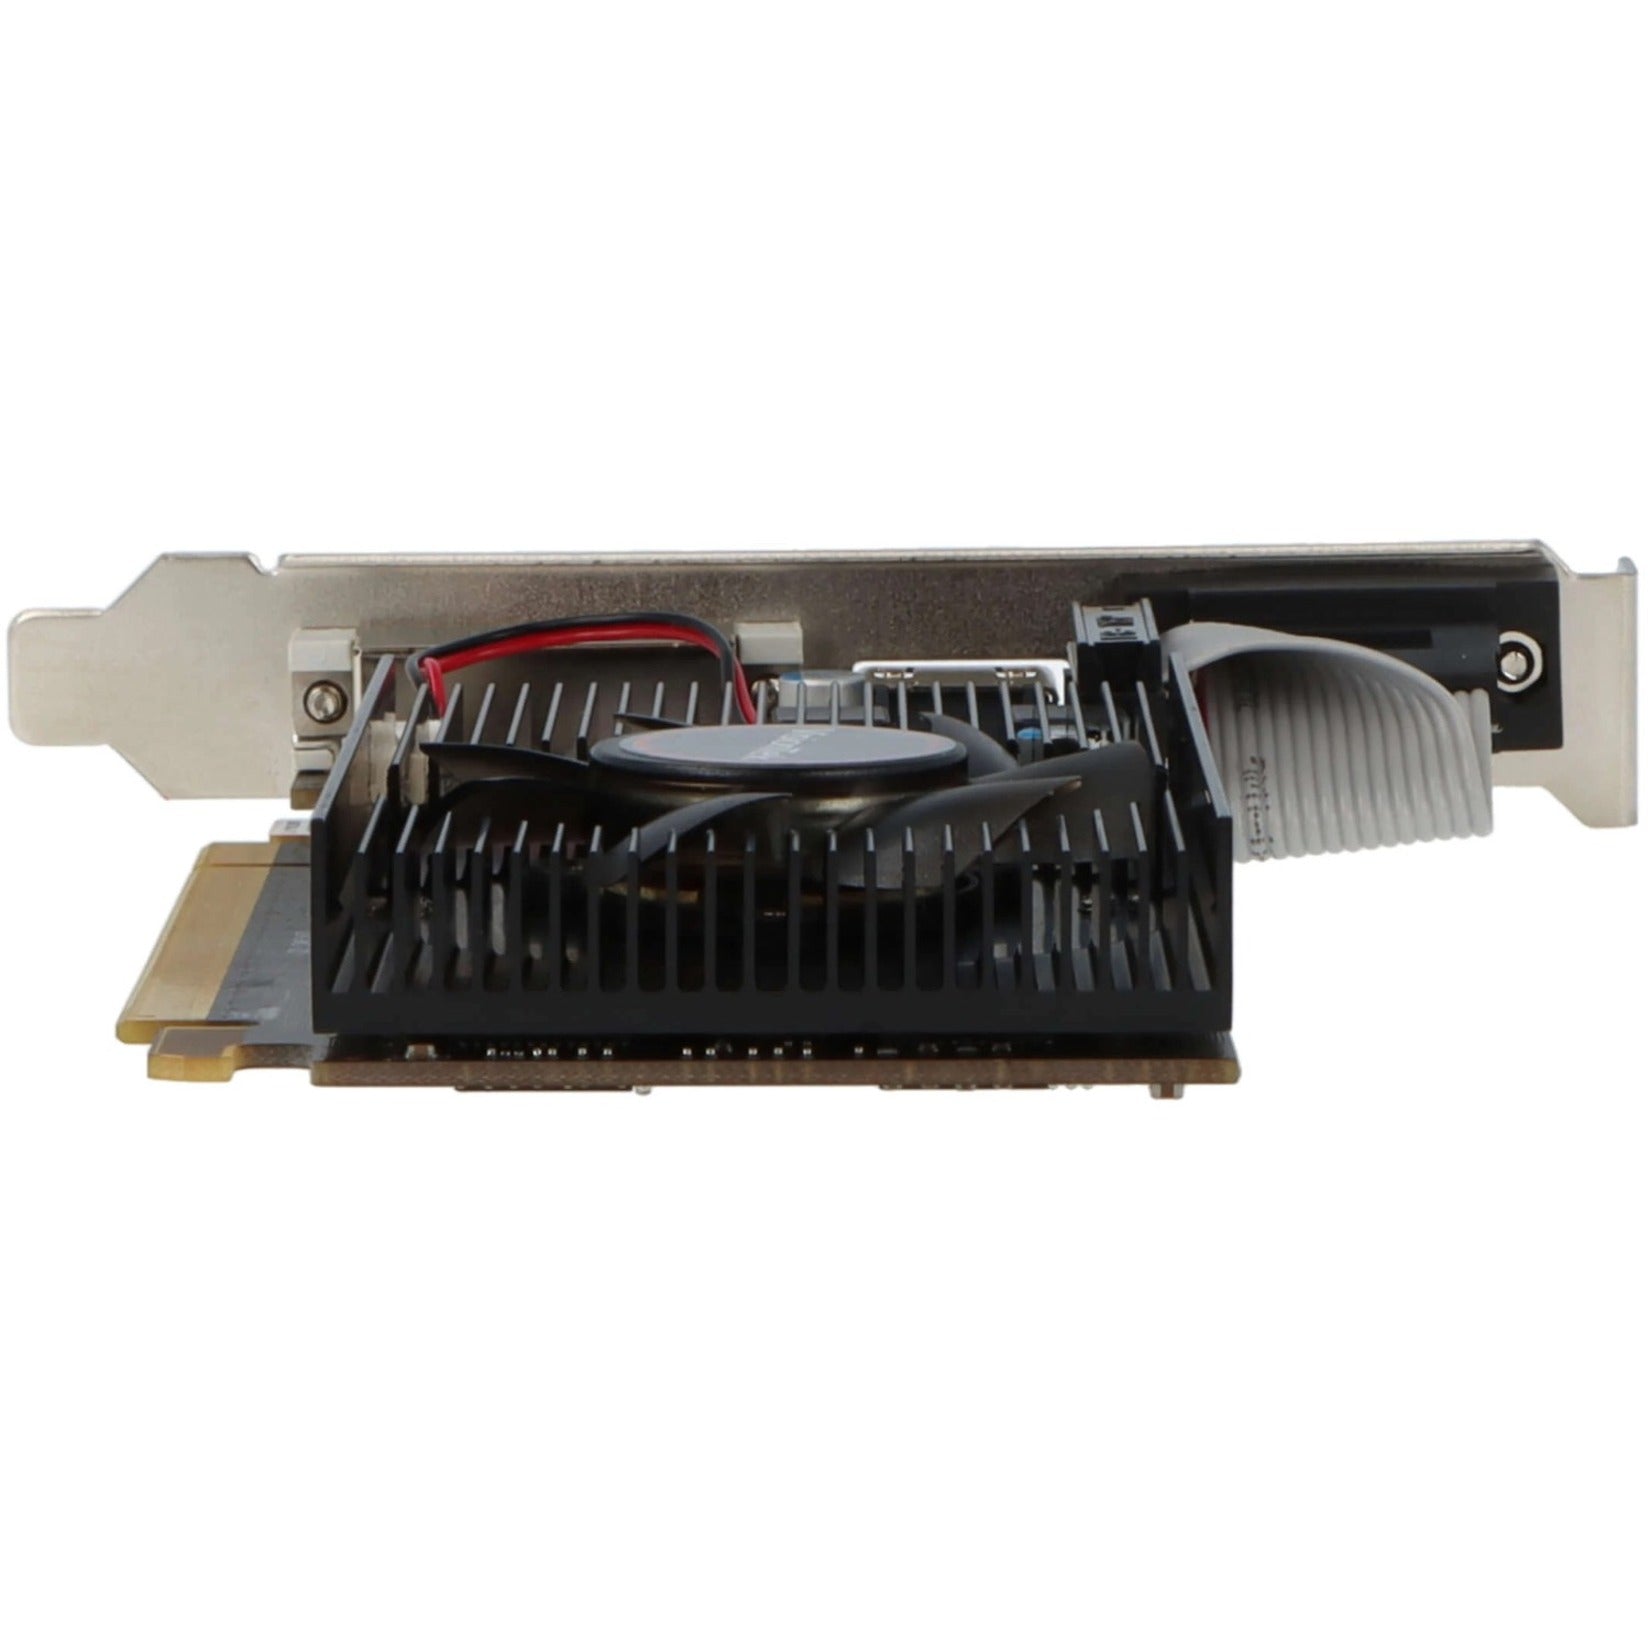 VisionTek 901491 Radeon HD 6570 Graphic Card, 1 GB GDDR3, DVI, VGA, HDMI, PCI Express 2.0 x16